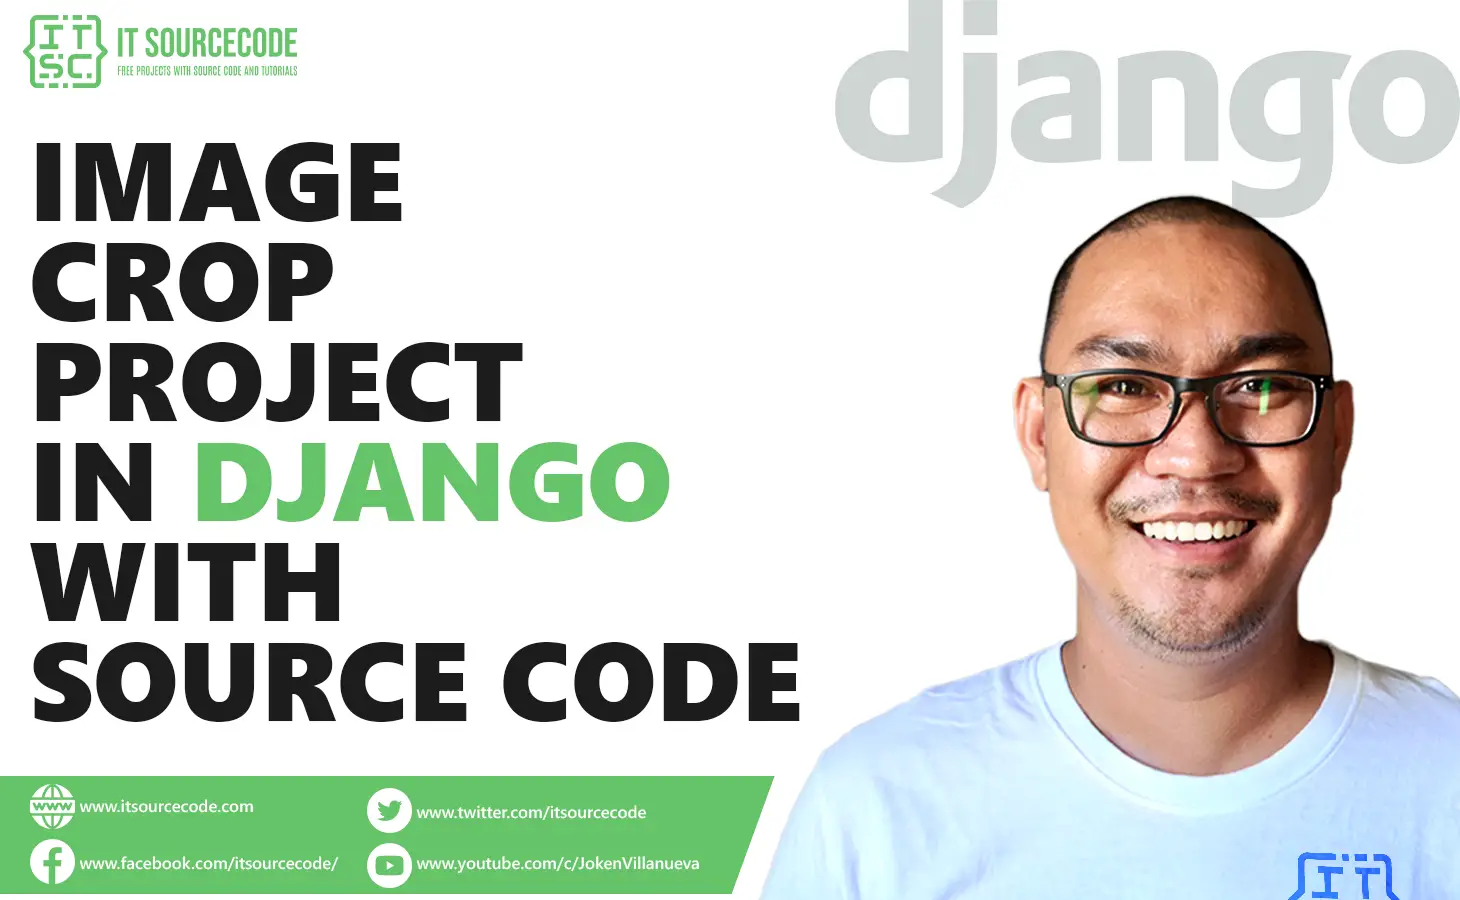 Image Crop Project in django with source code